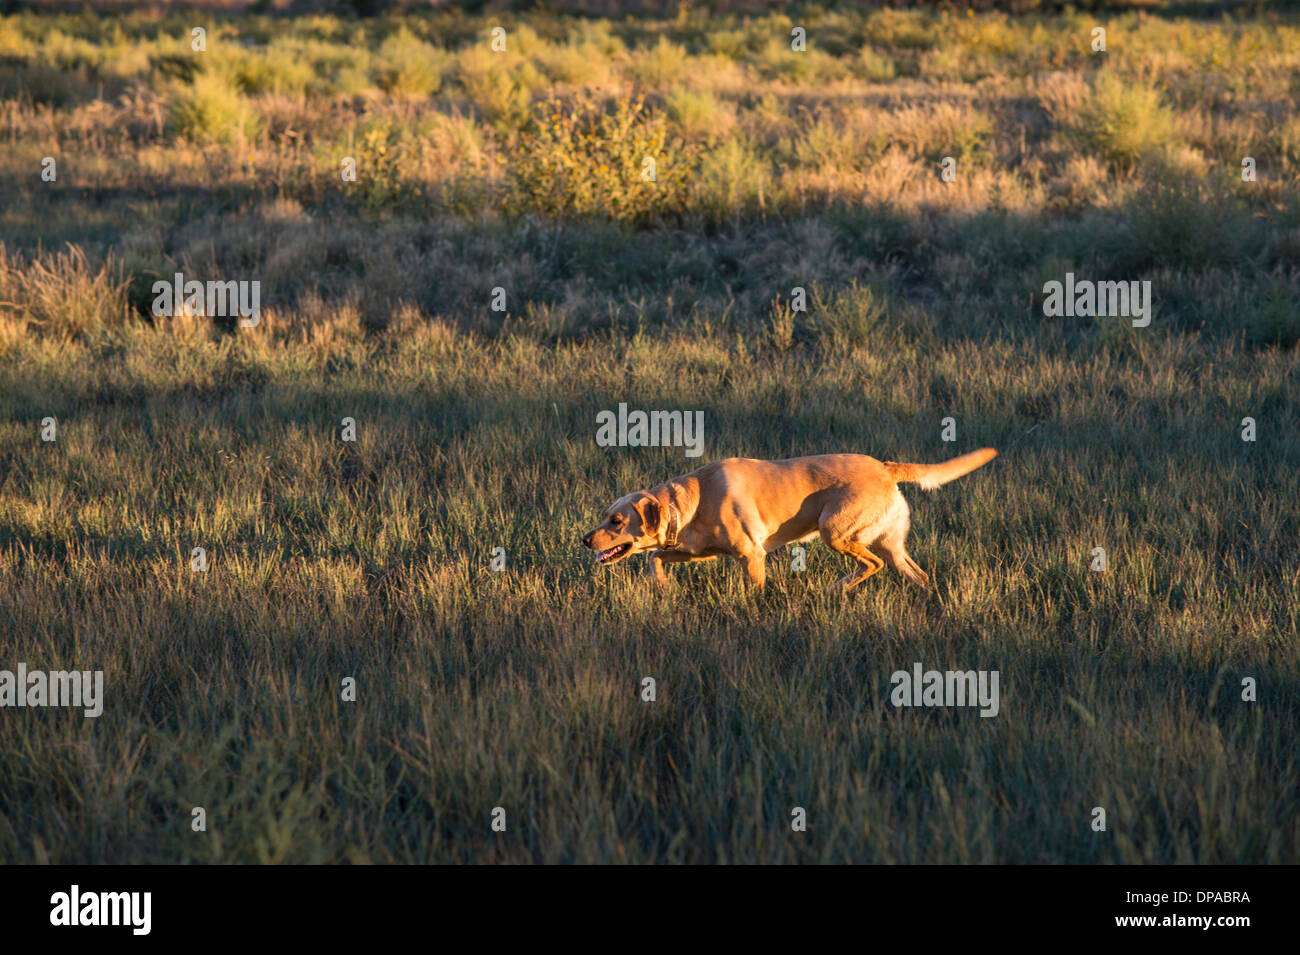 Yellow Lab Jagd in einem Colorado-Feld Stockfoto